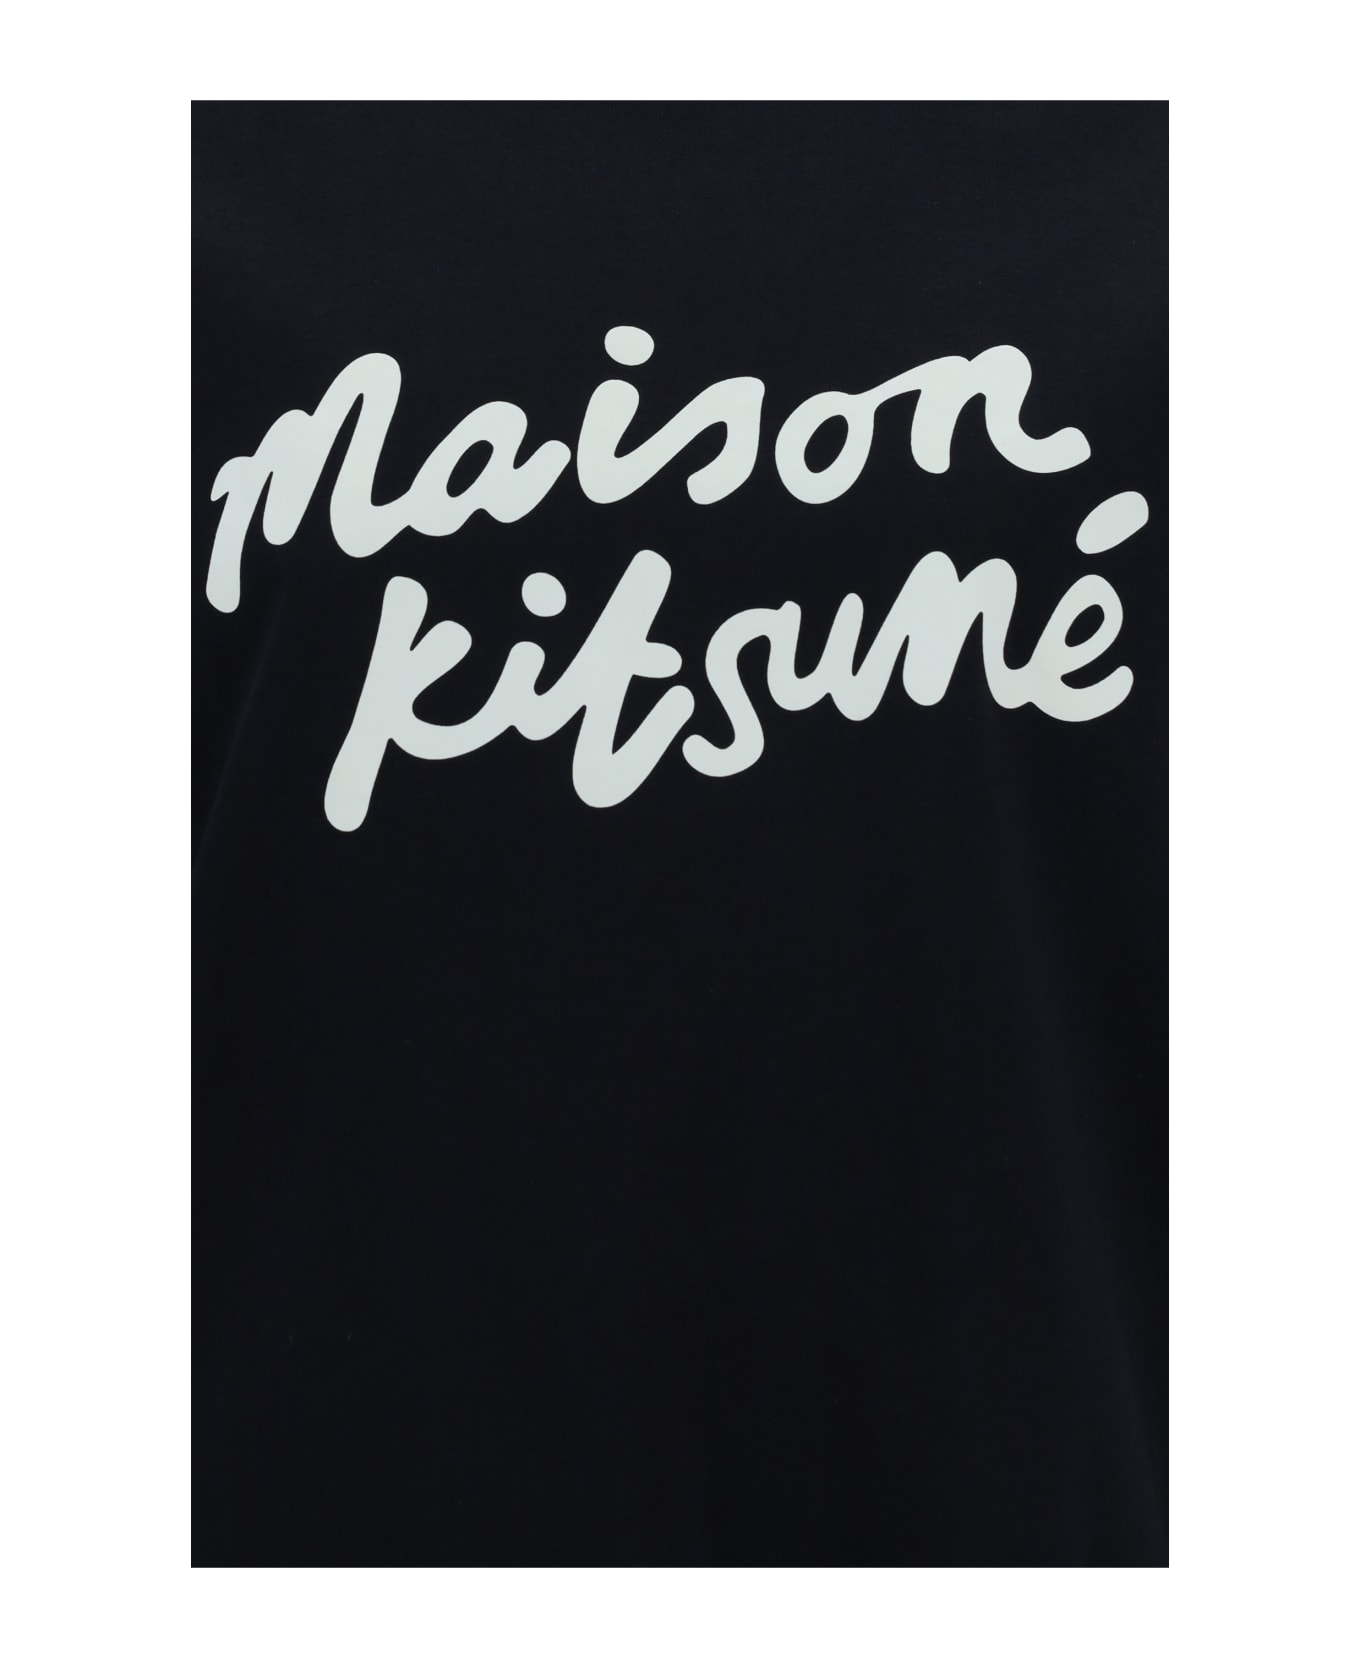 Maison Kitsuné T-shirt - Black/white シャツ